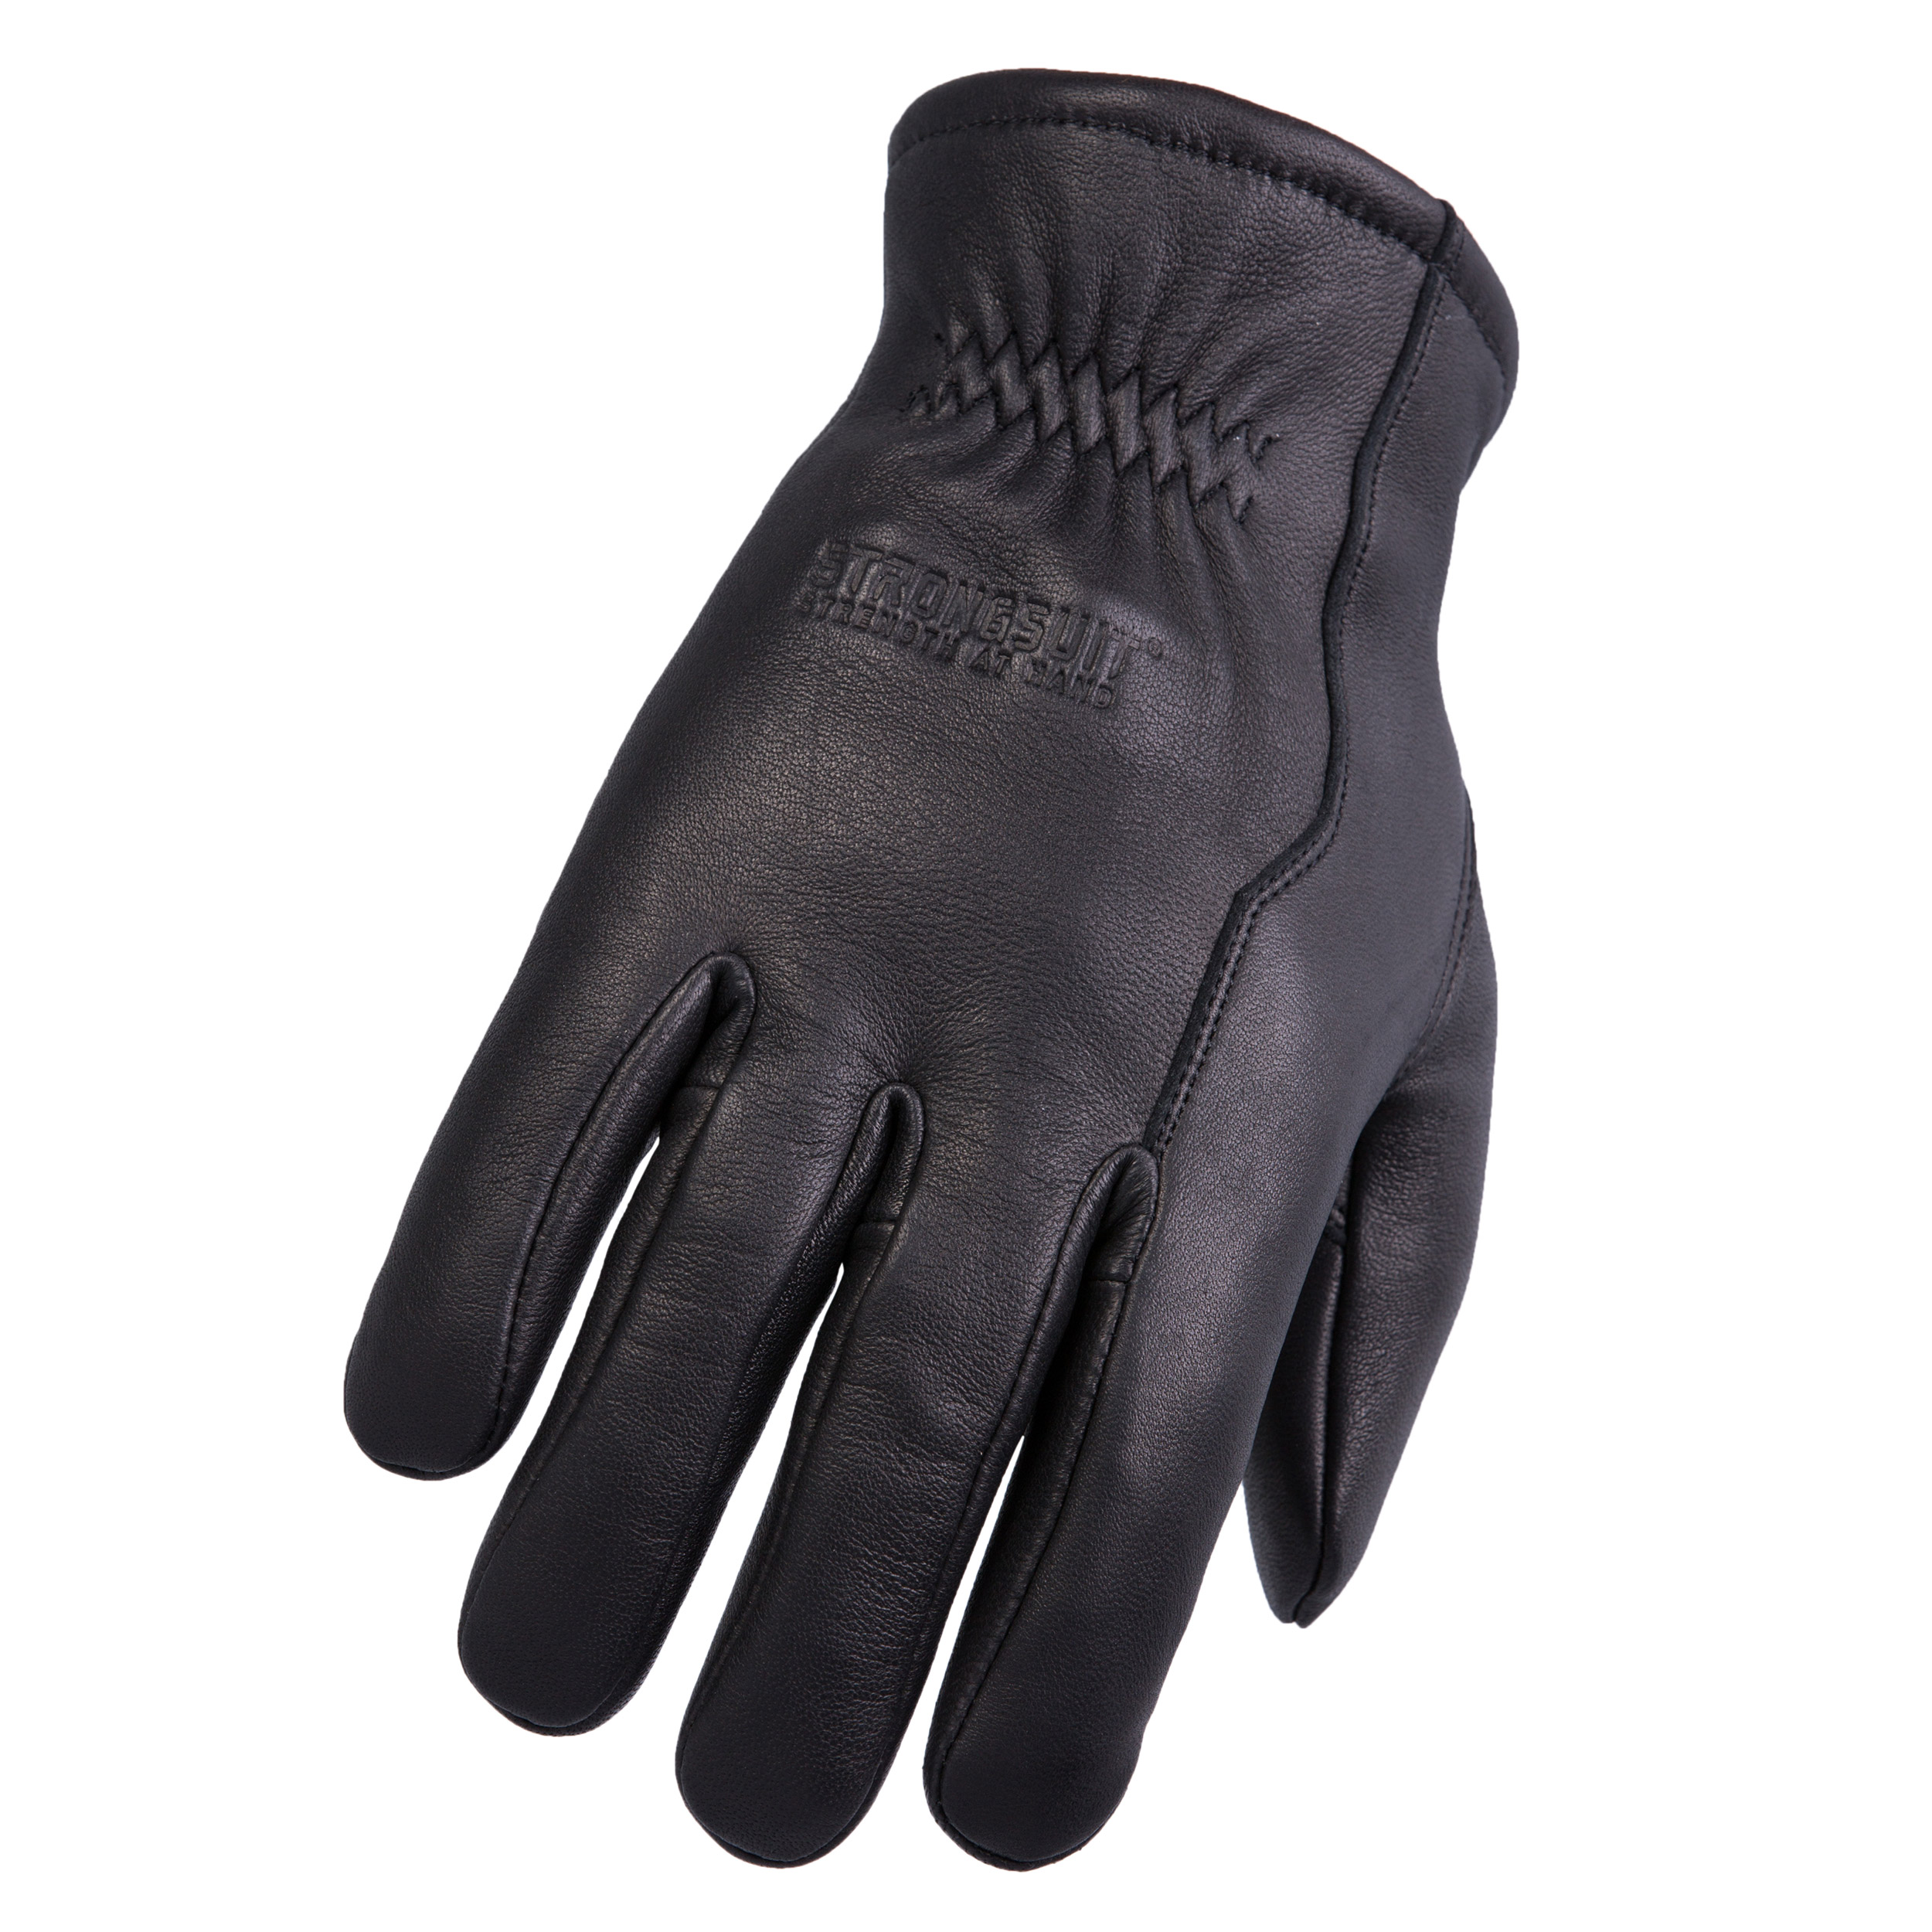 Weathermaster Gloves Xl